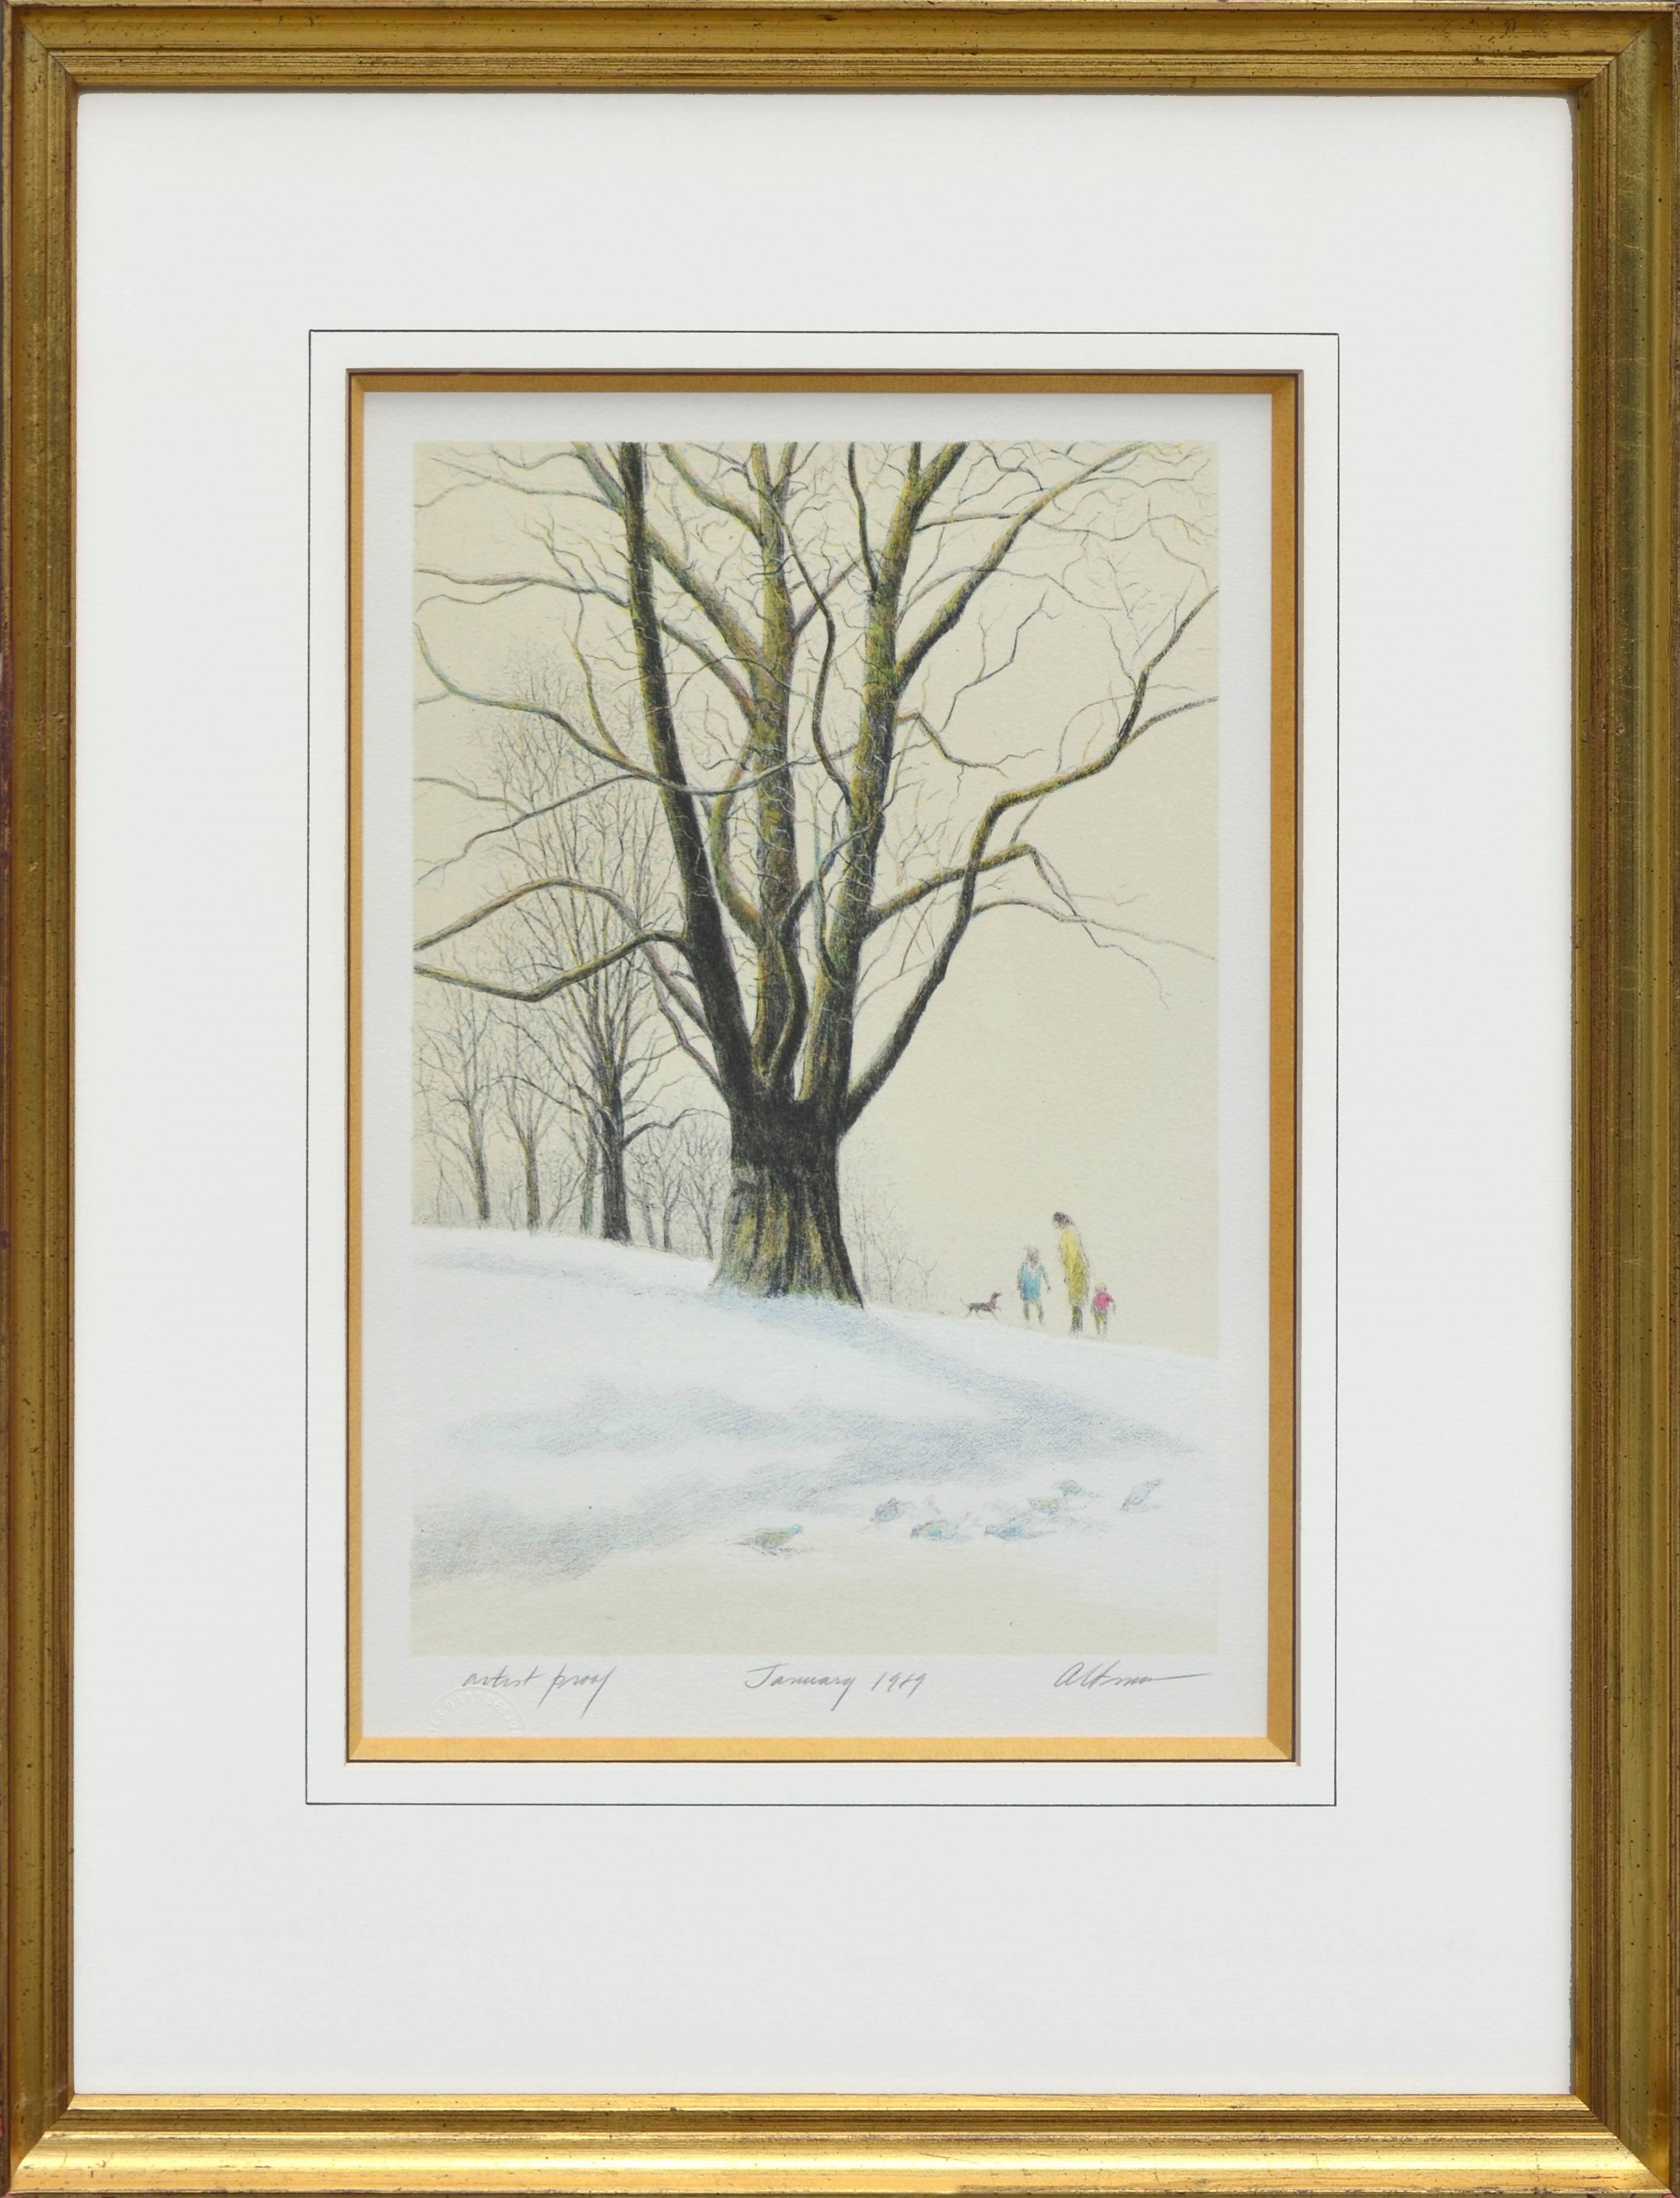 Harold Altman Landscape Print - Central Park in the Snow